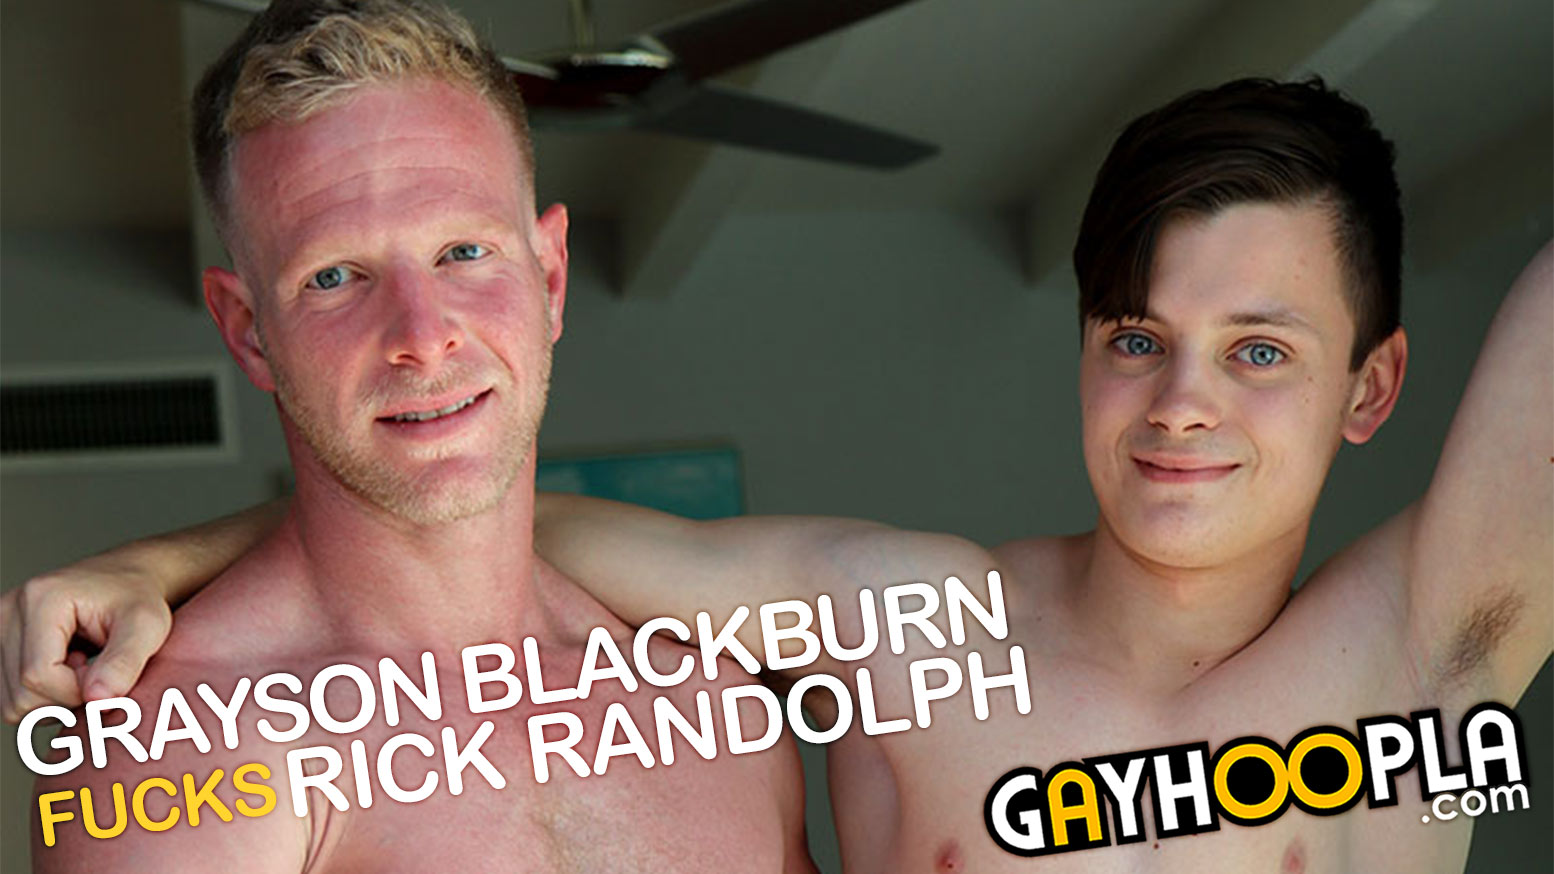 Transexual Orgy With Steve Buscemi - GayHoopla: Grayson Blackburn FUCKS Rick Randolph - WAYBIG